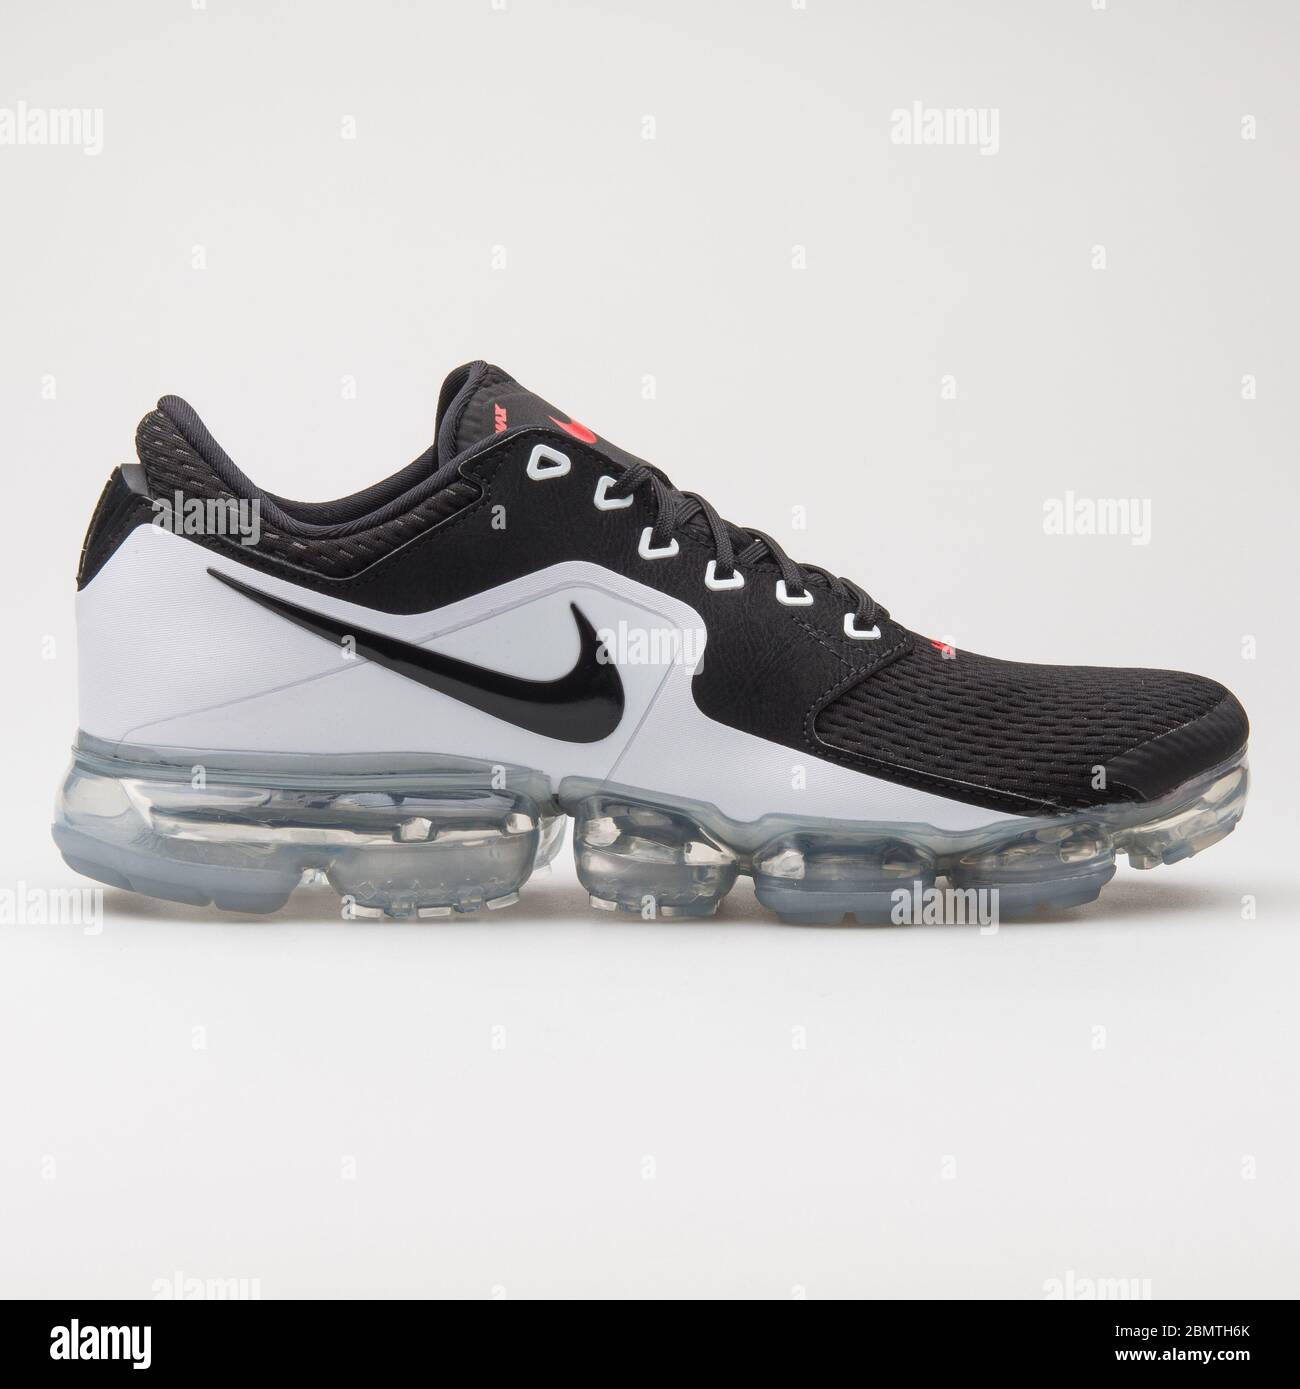 VIENNA, AUSTRIA - 12 GENNAIO 2018: Sneaker Nike Air Vapormax in bianco e  nero su sfondo bianco Foto stock - Alamy